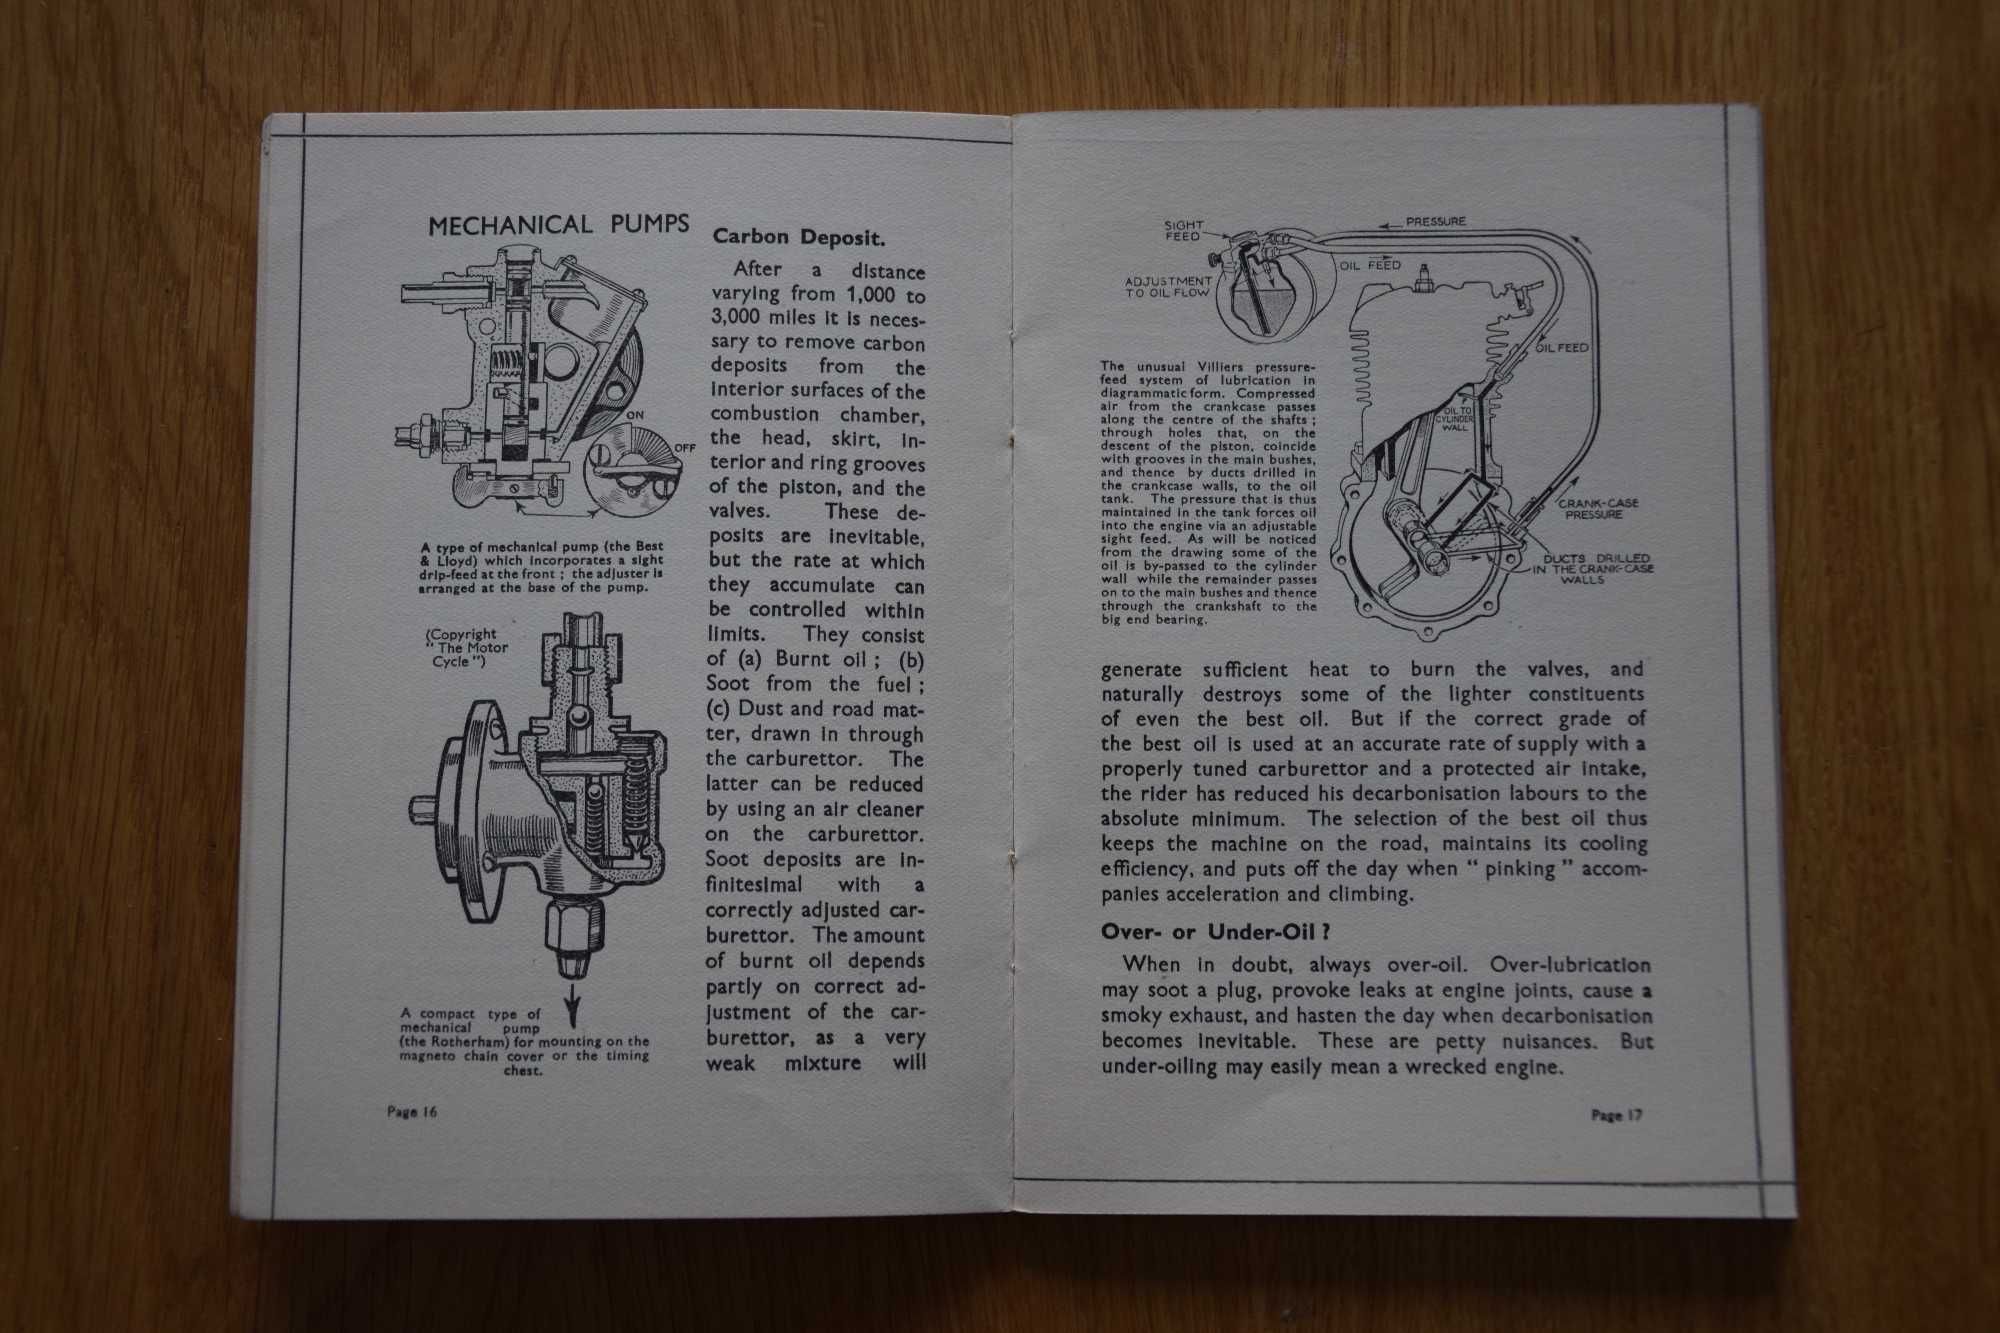 Instrukcja Katalog Motor Cycle  norton ariel BSA Panther